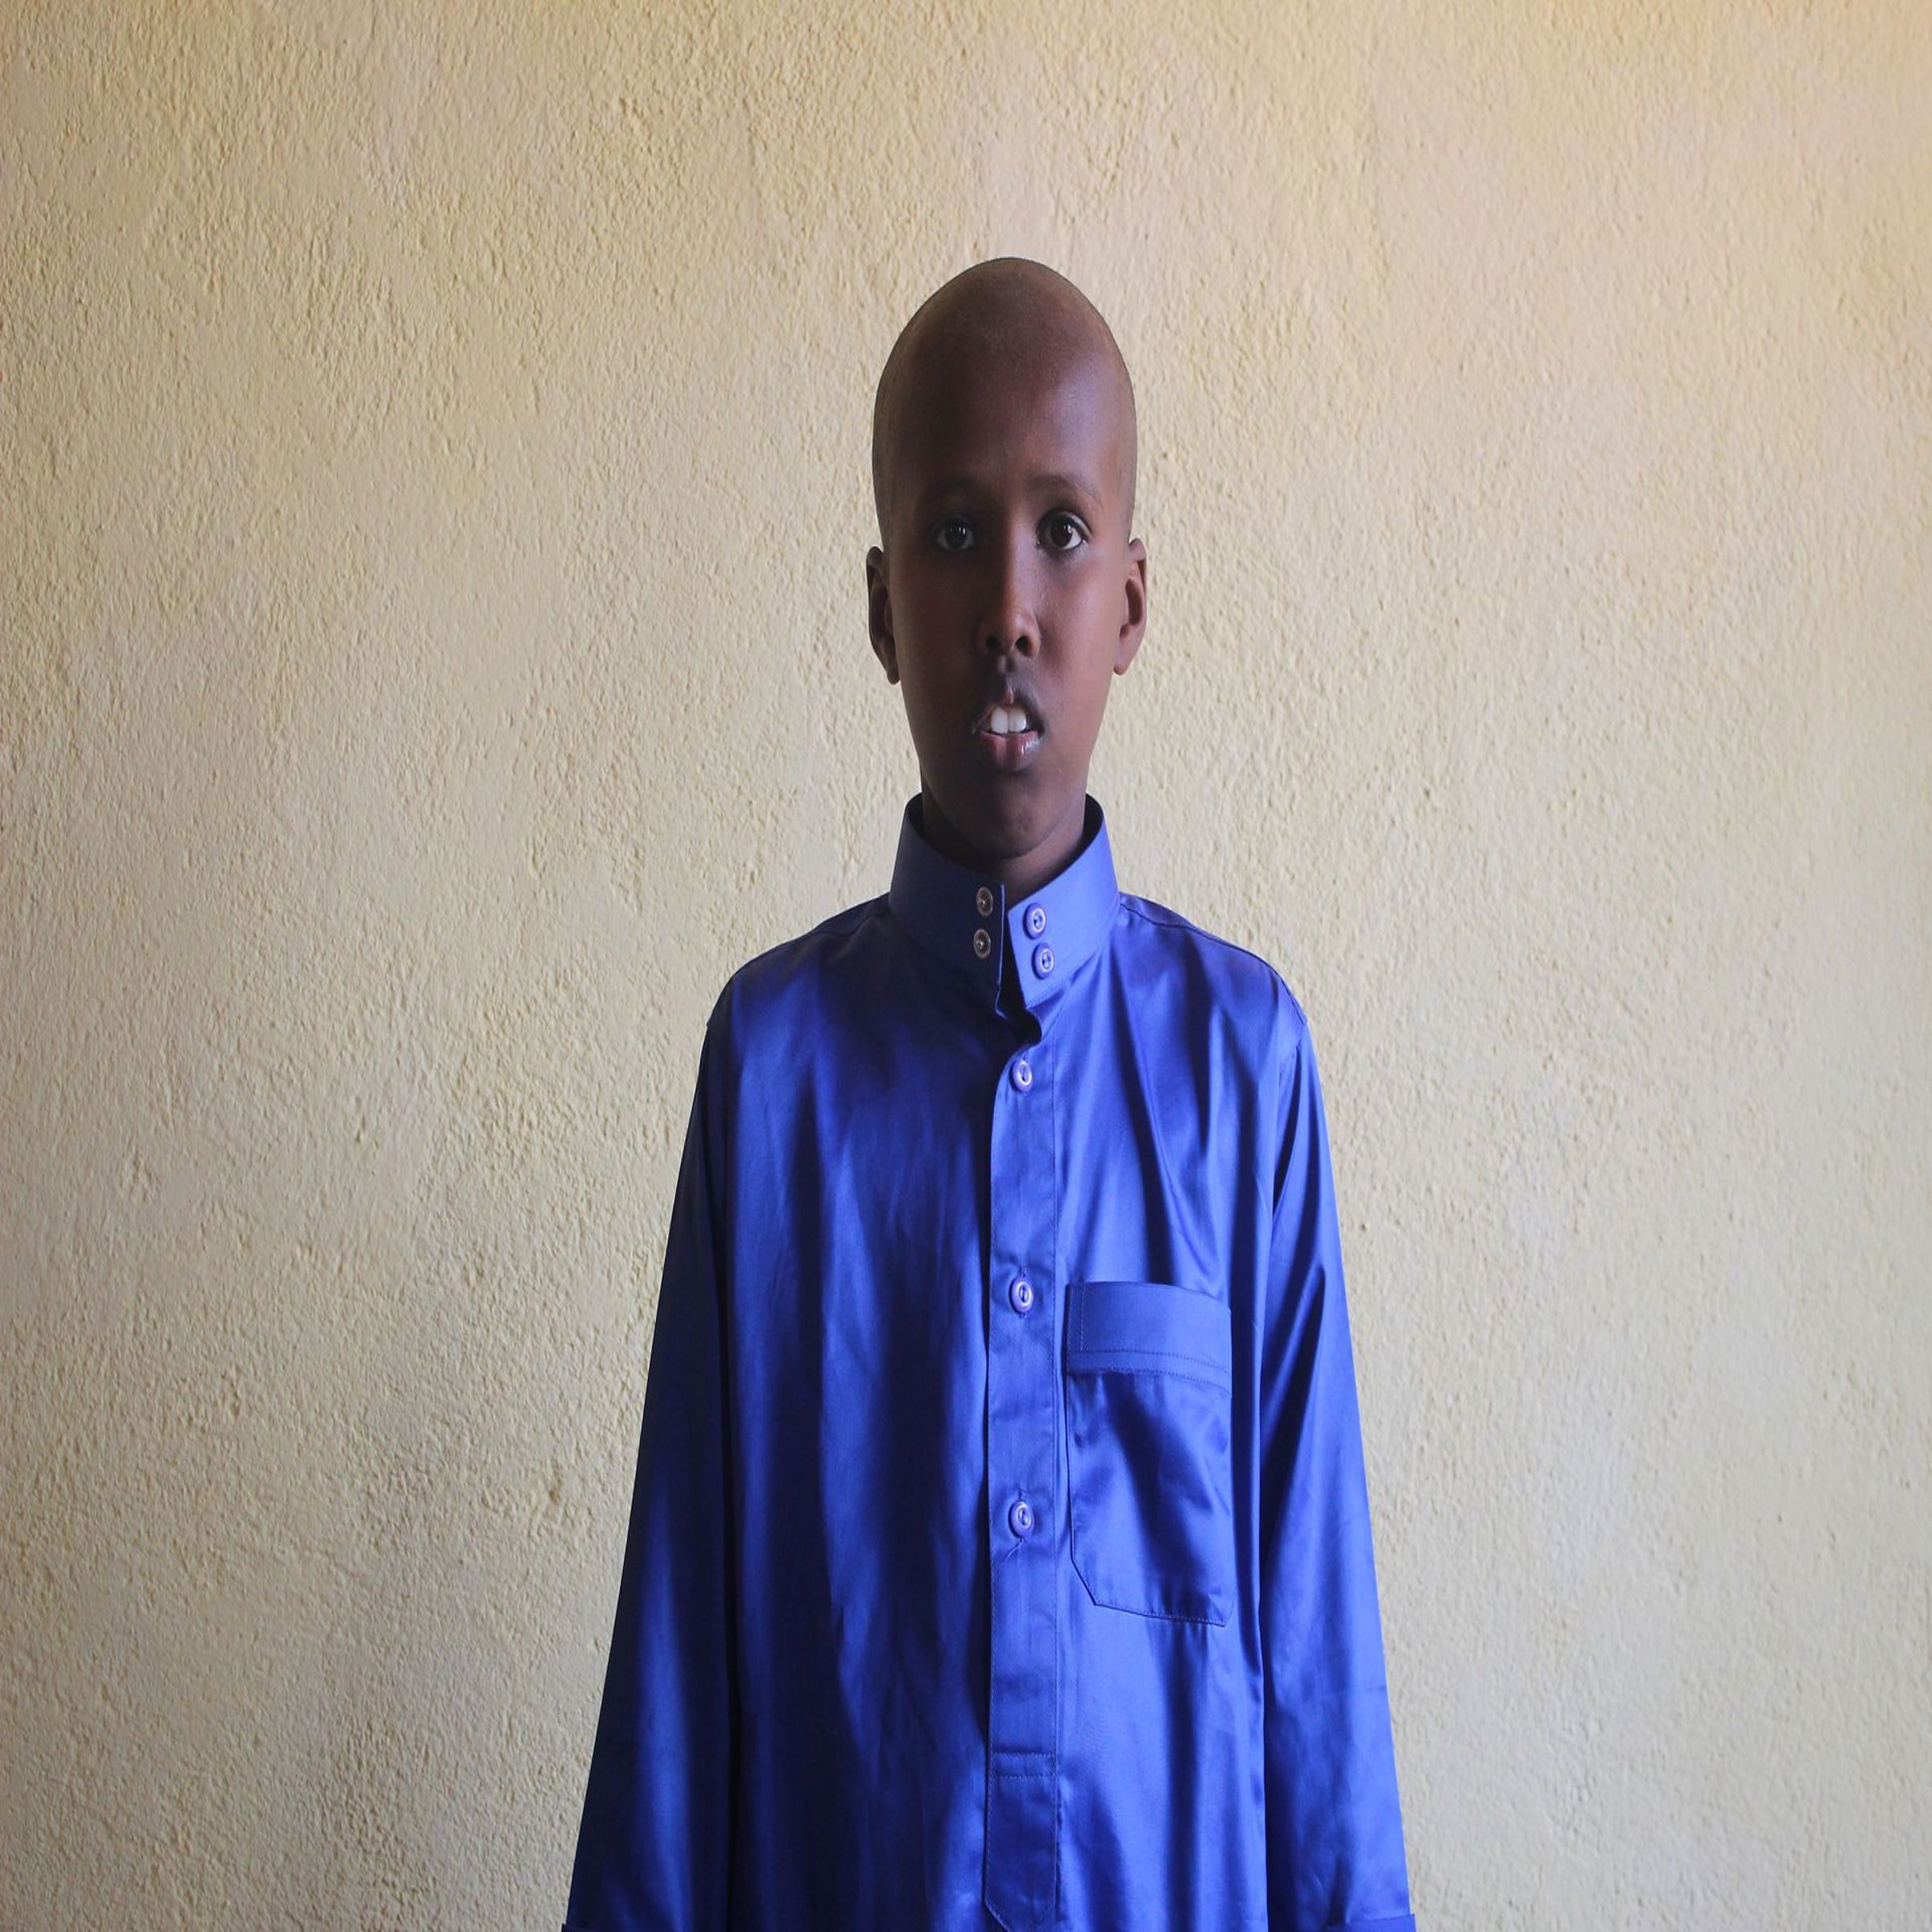 Human Appeal Orphan - Abdikafi Mohamed